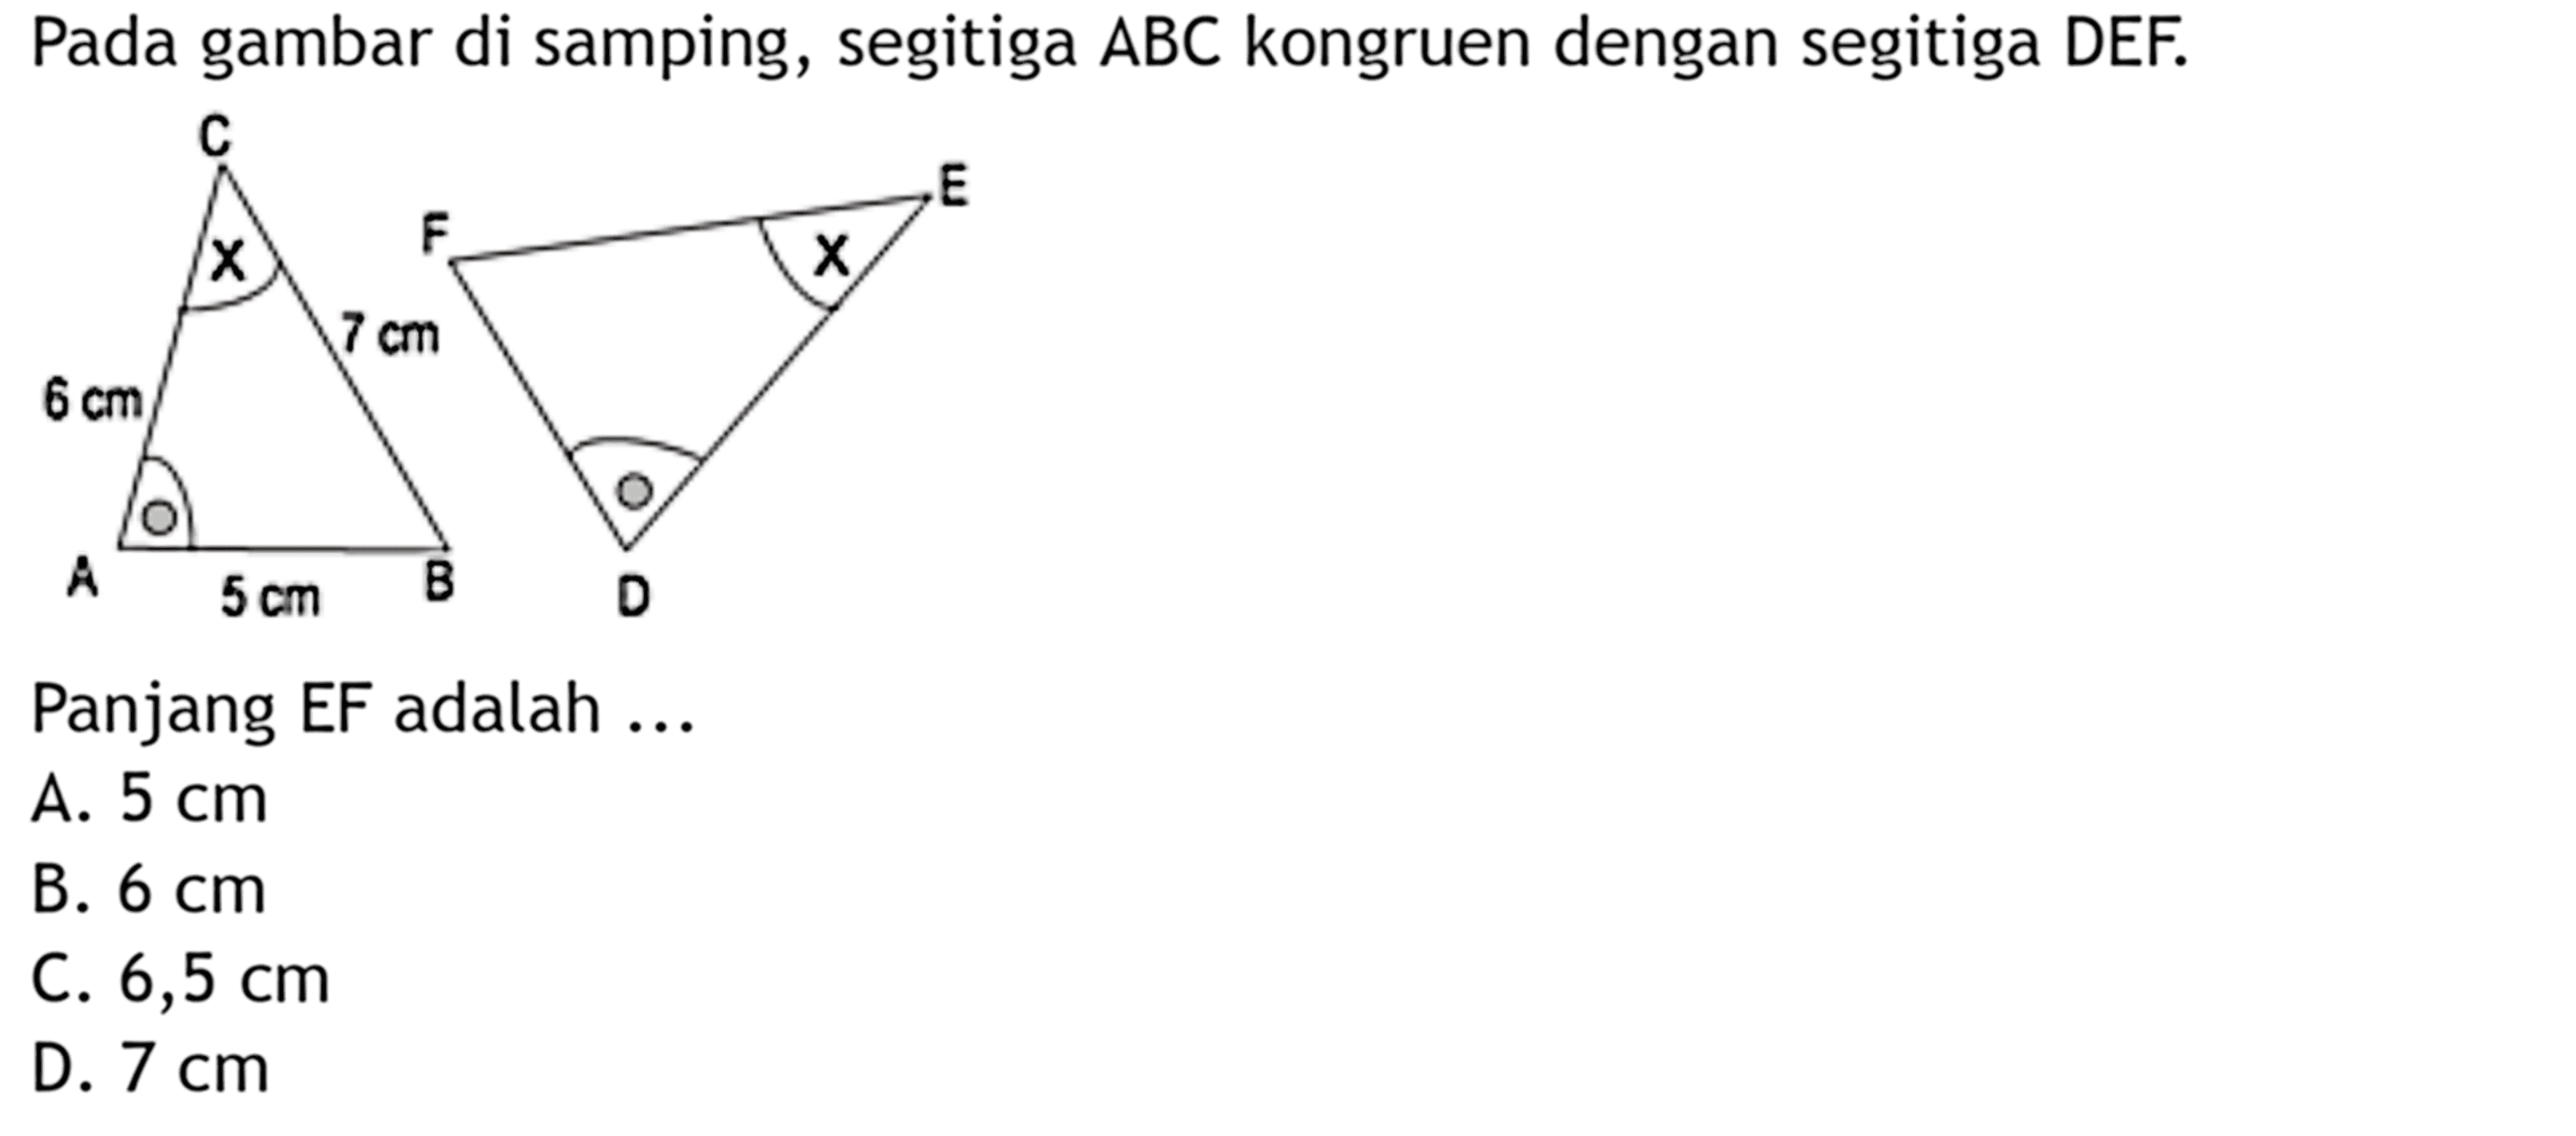 Pada gambar di samping, segitiga ABC kongruen dengan segitiga DEF.Panjang EF adalah ...